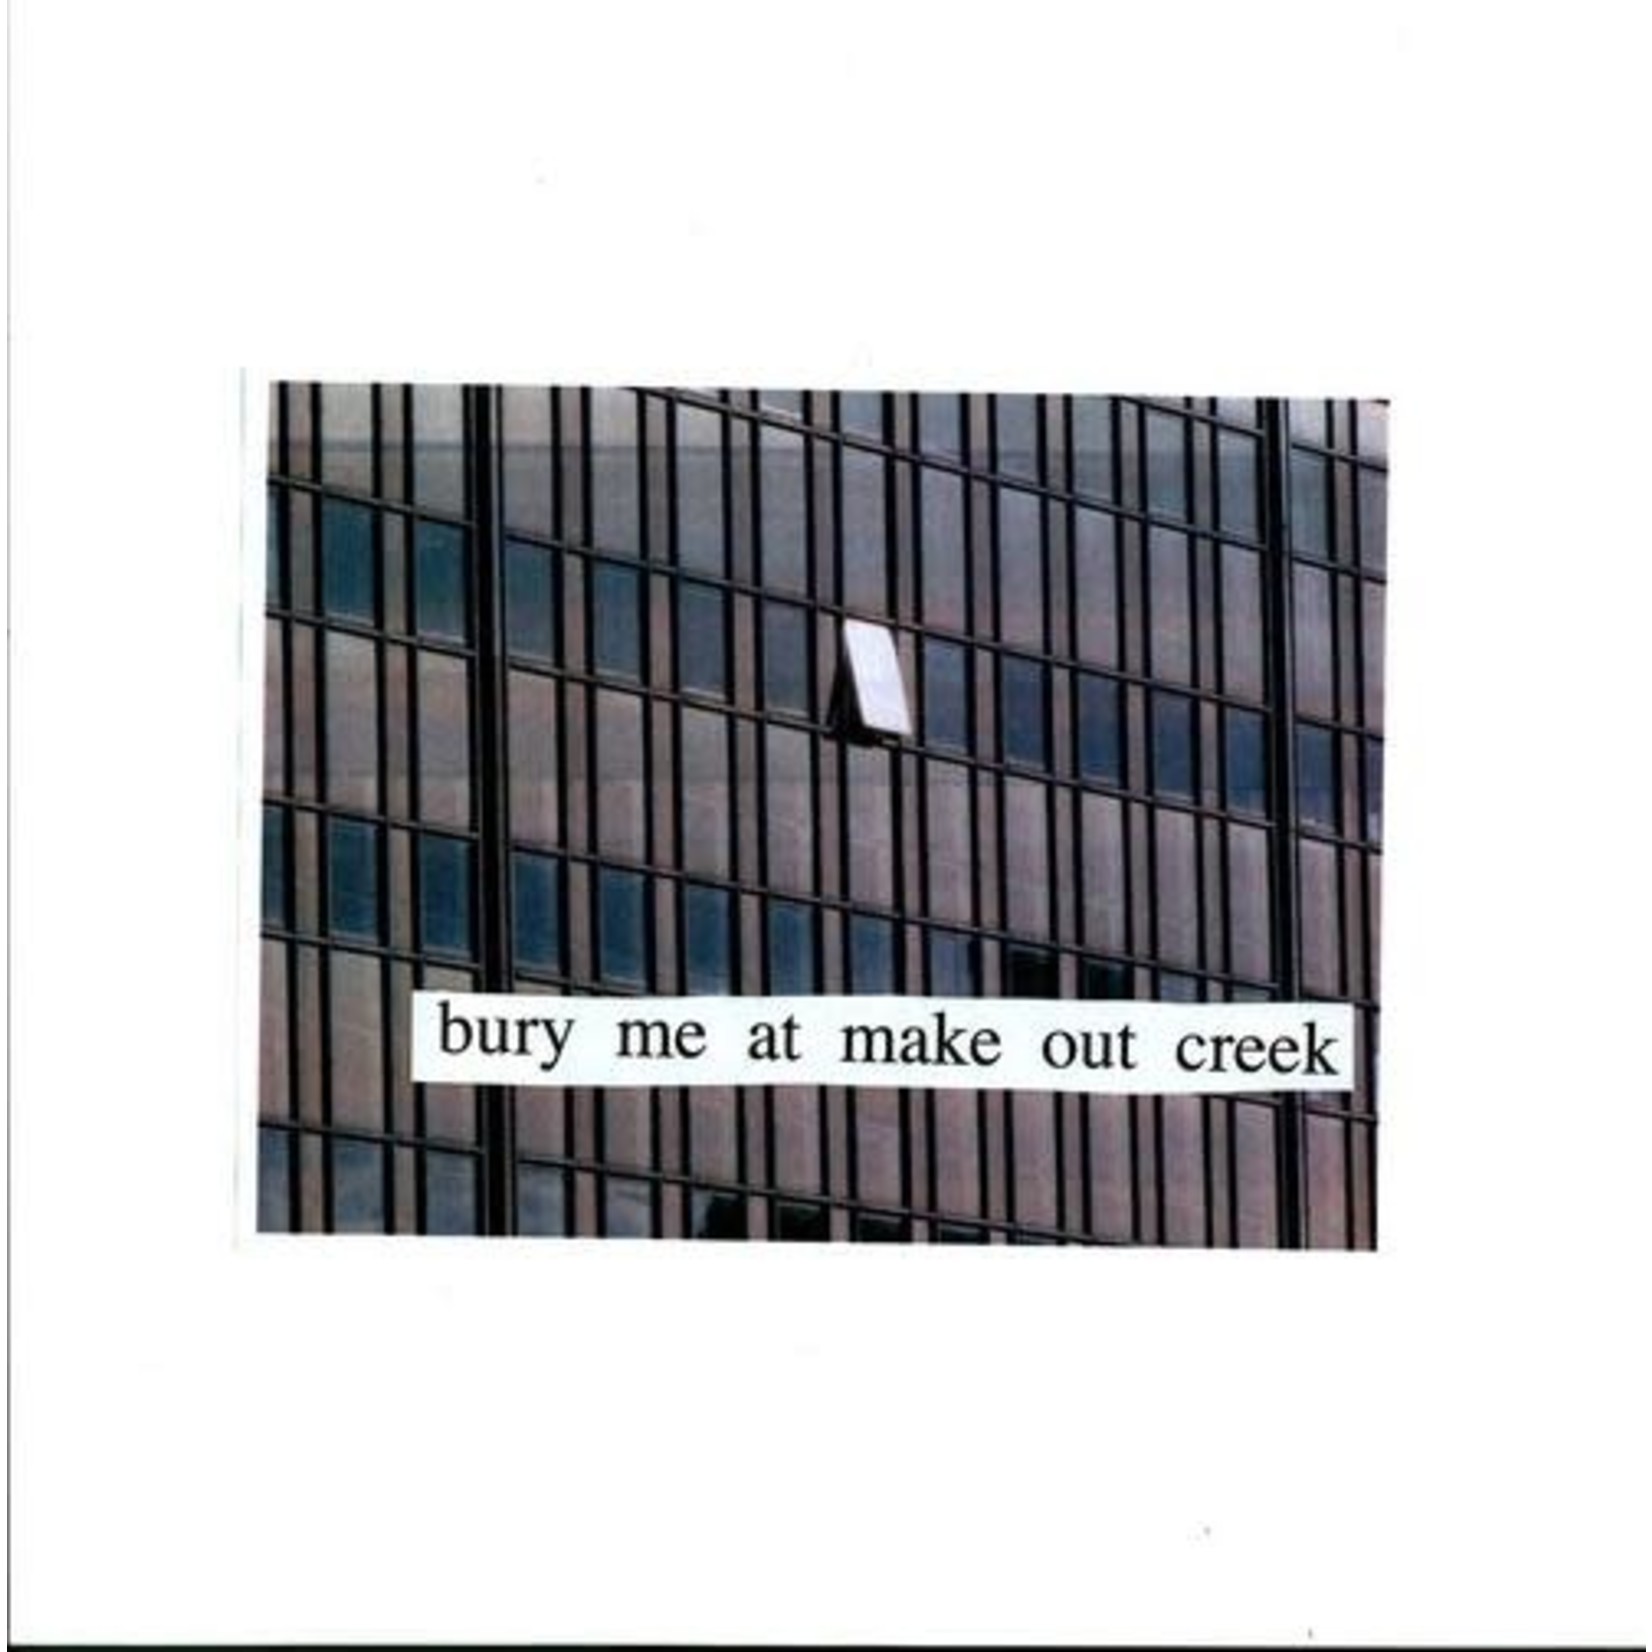 [New] Mitski - Bury Me at Makeout Creek